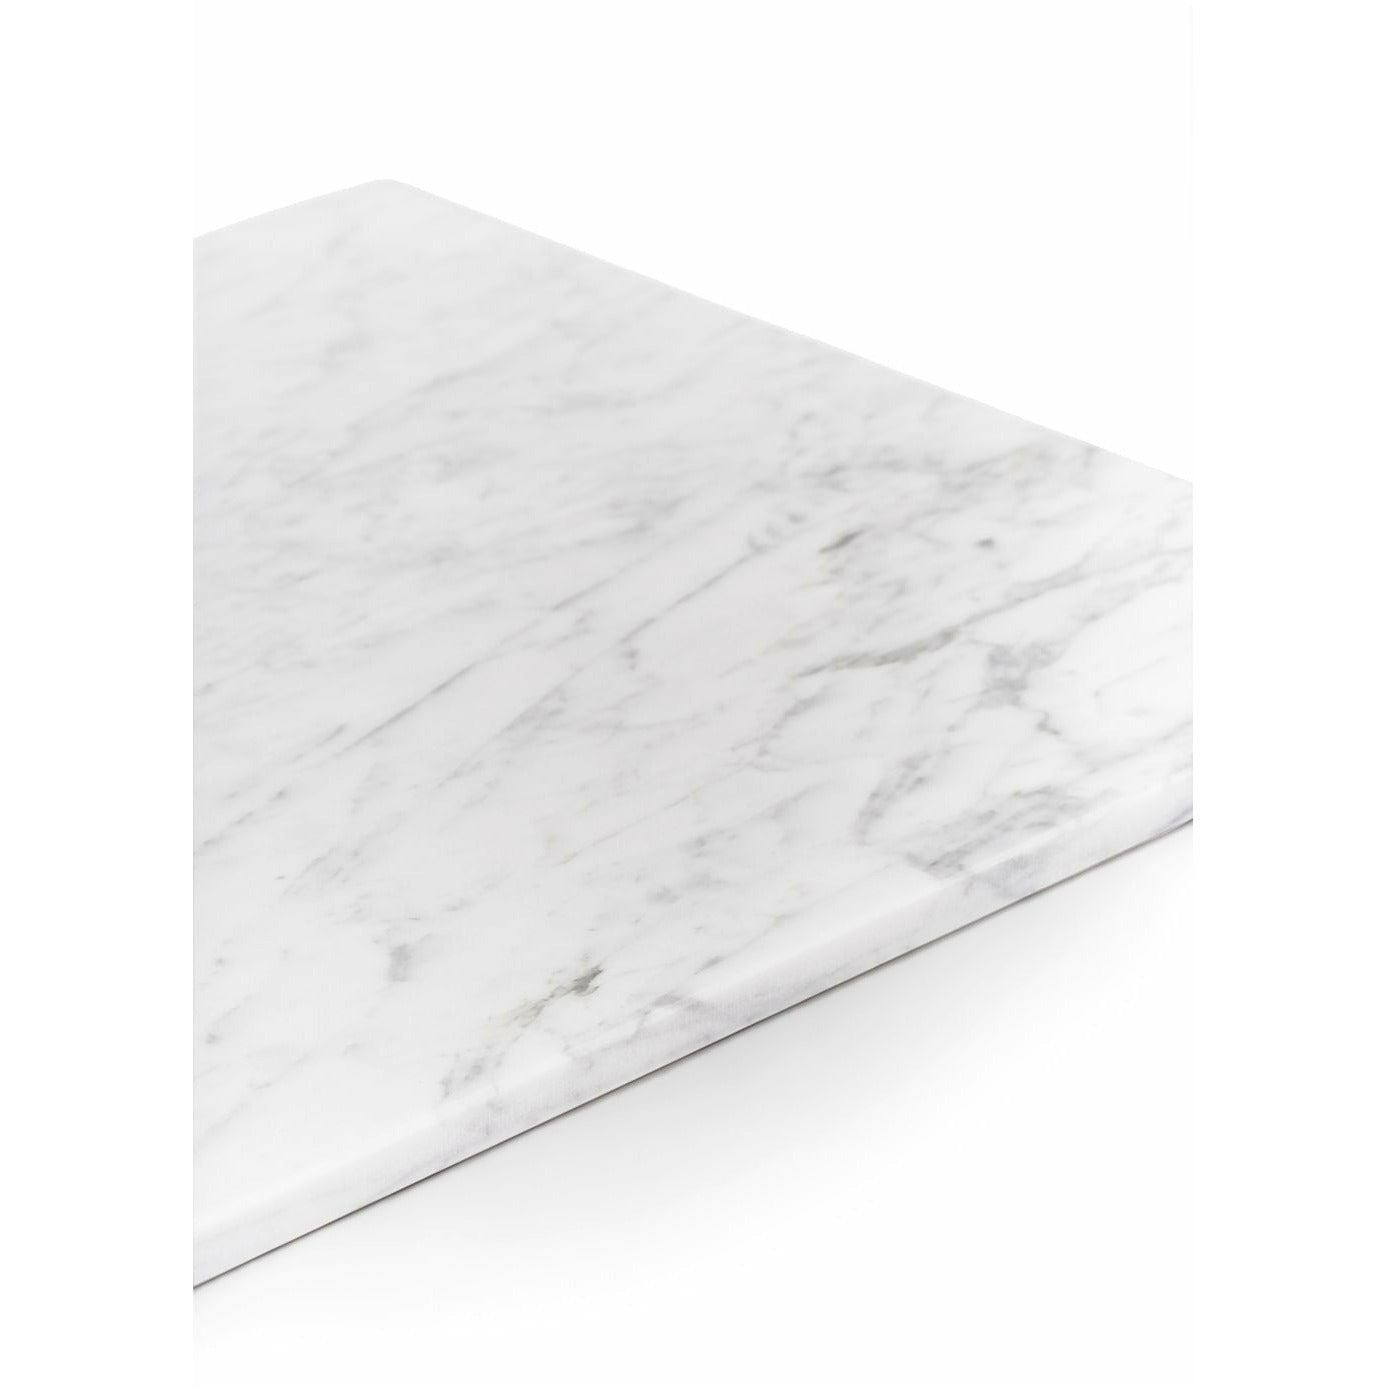 Skultuna Carrara Marble Plate With Logo, Small